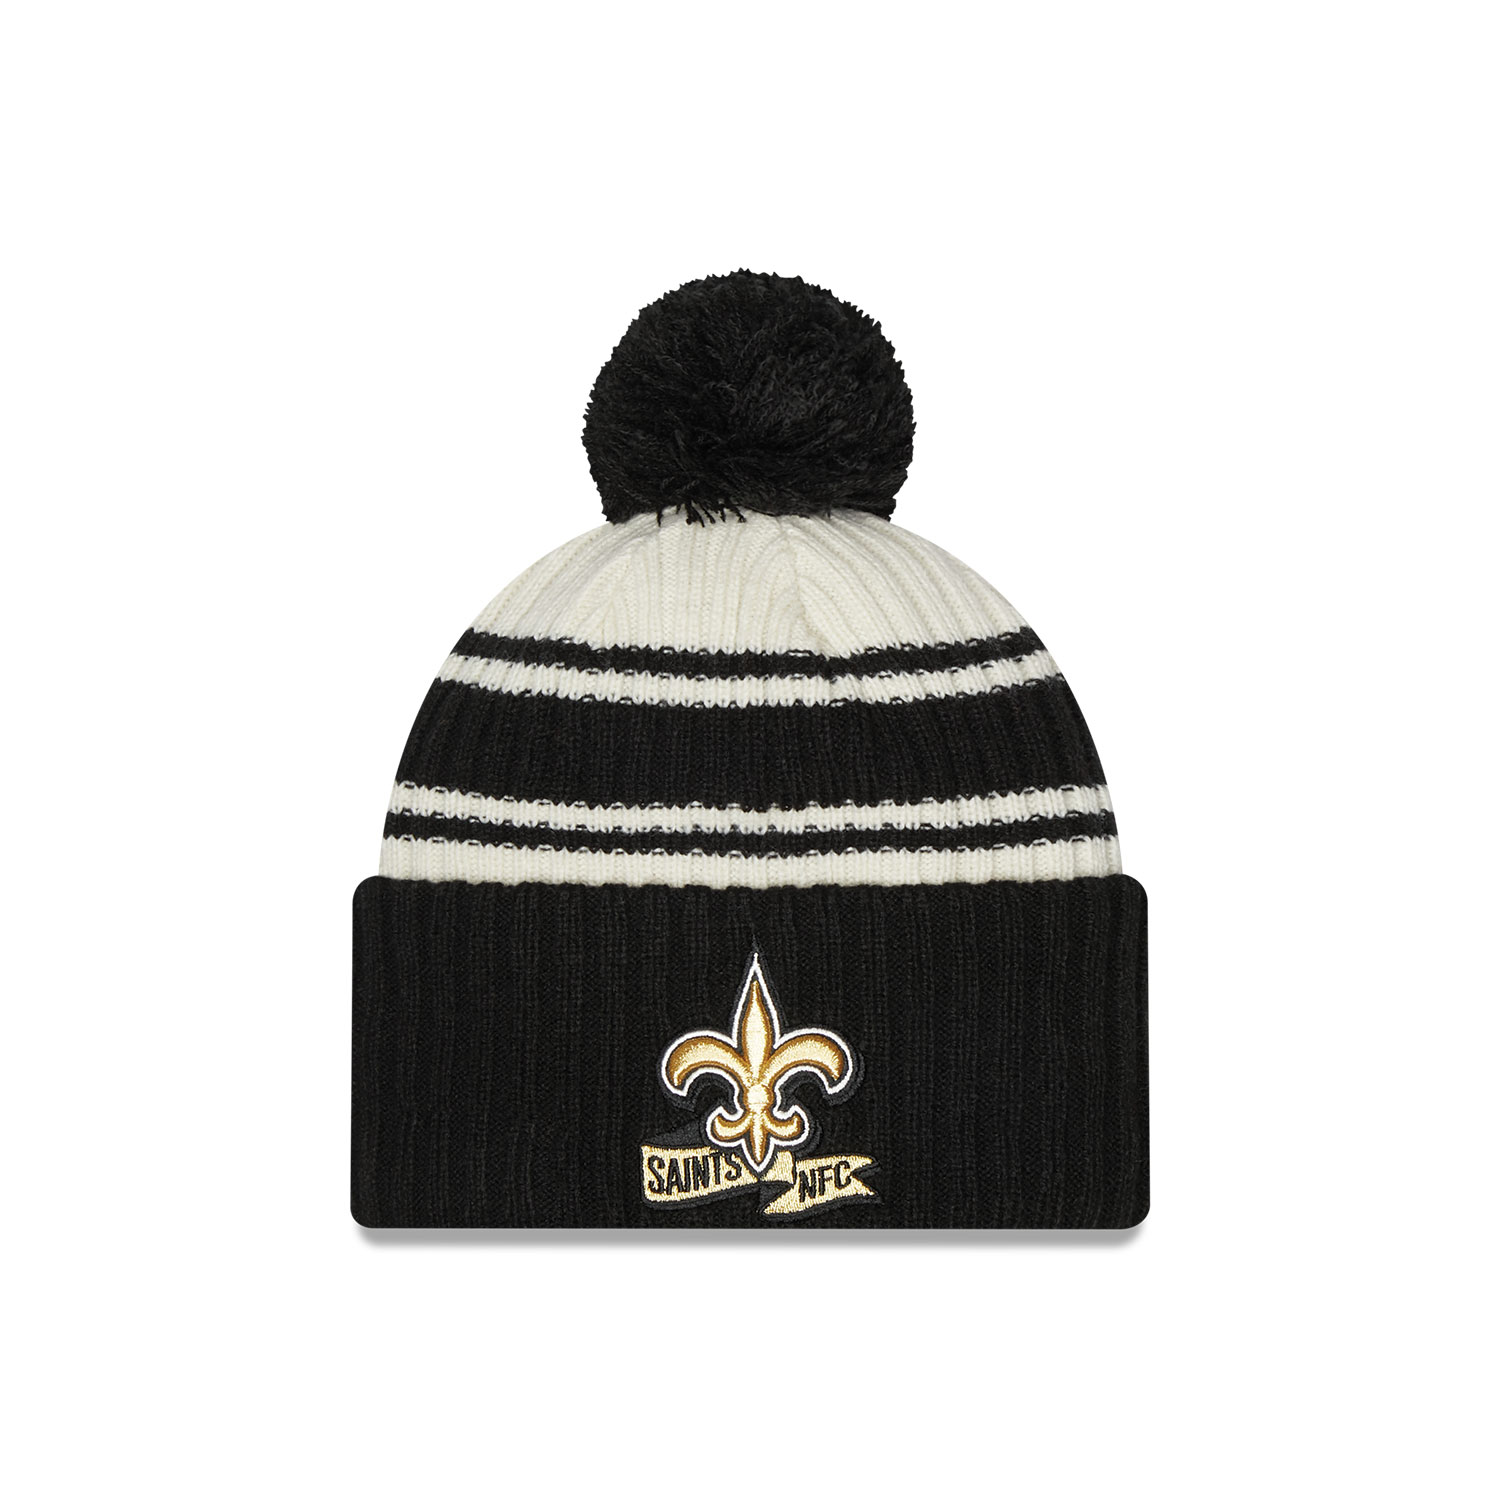 New Orleans Saints NFL Sideline Black Beanie Hat